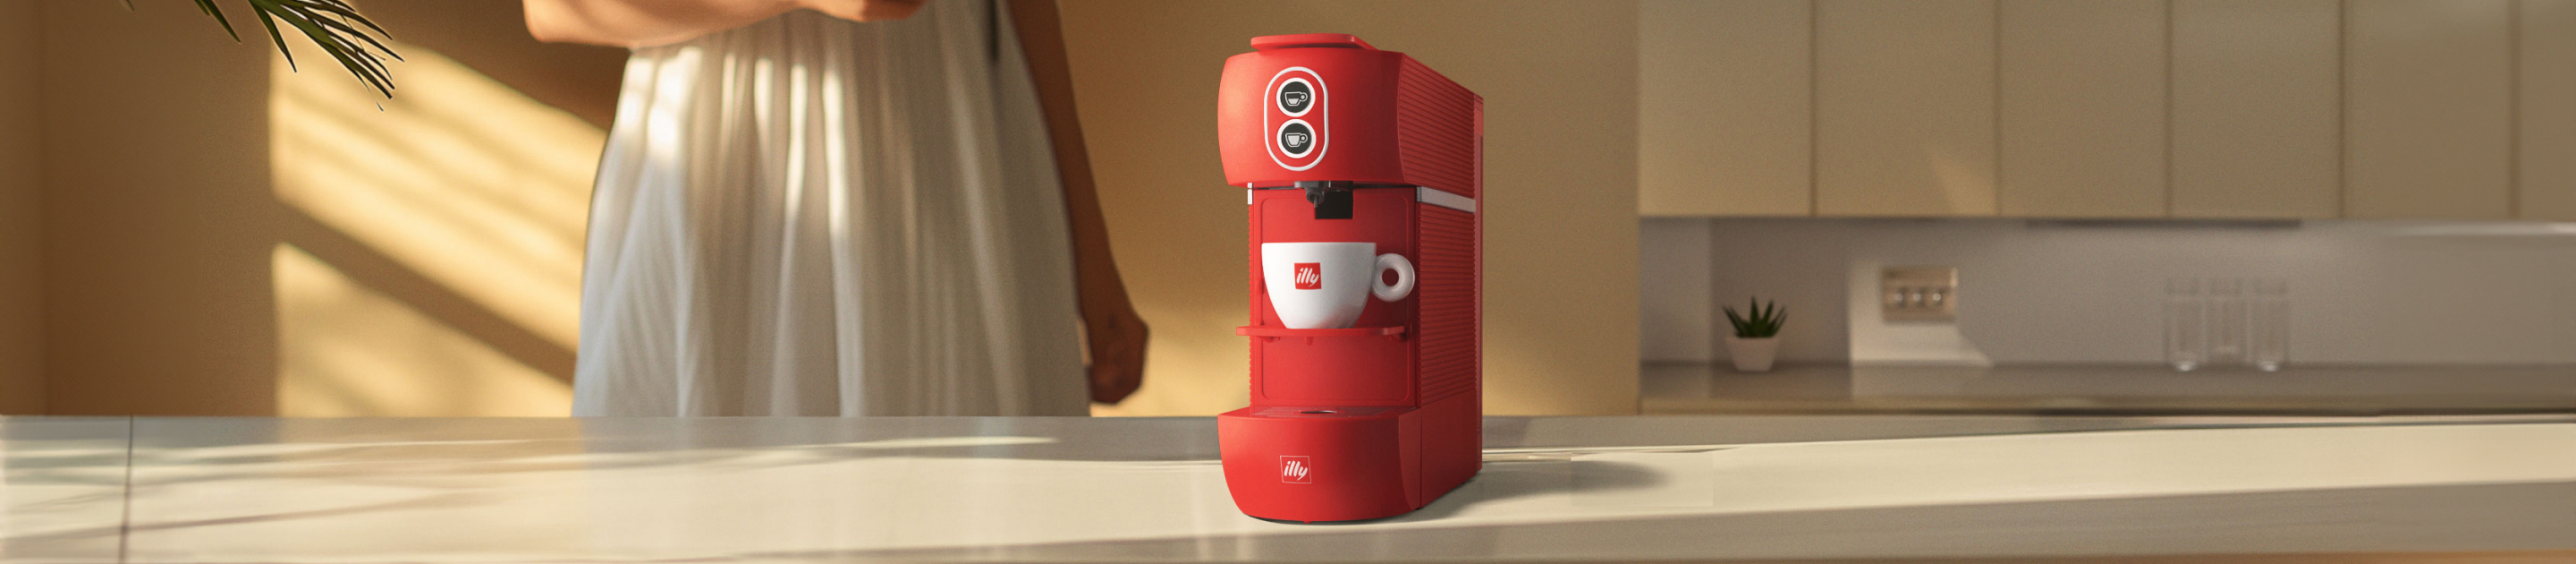 Machines voor E.S.E.-koffiepads